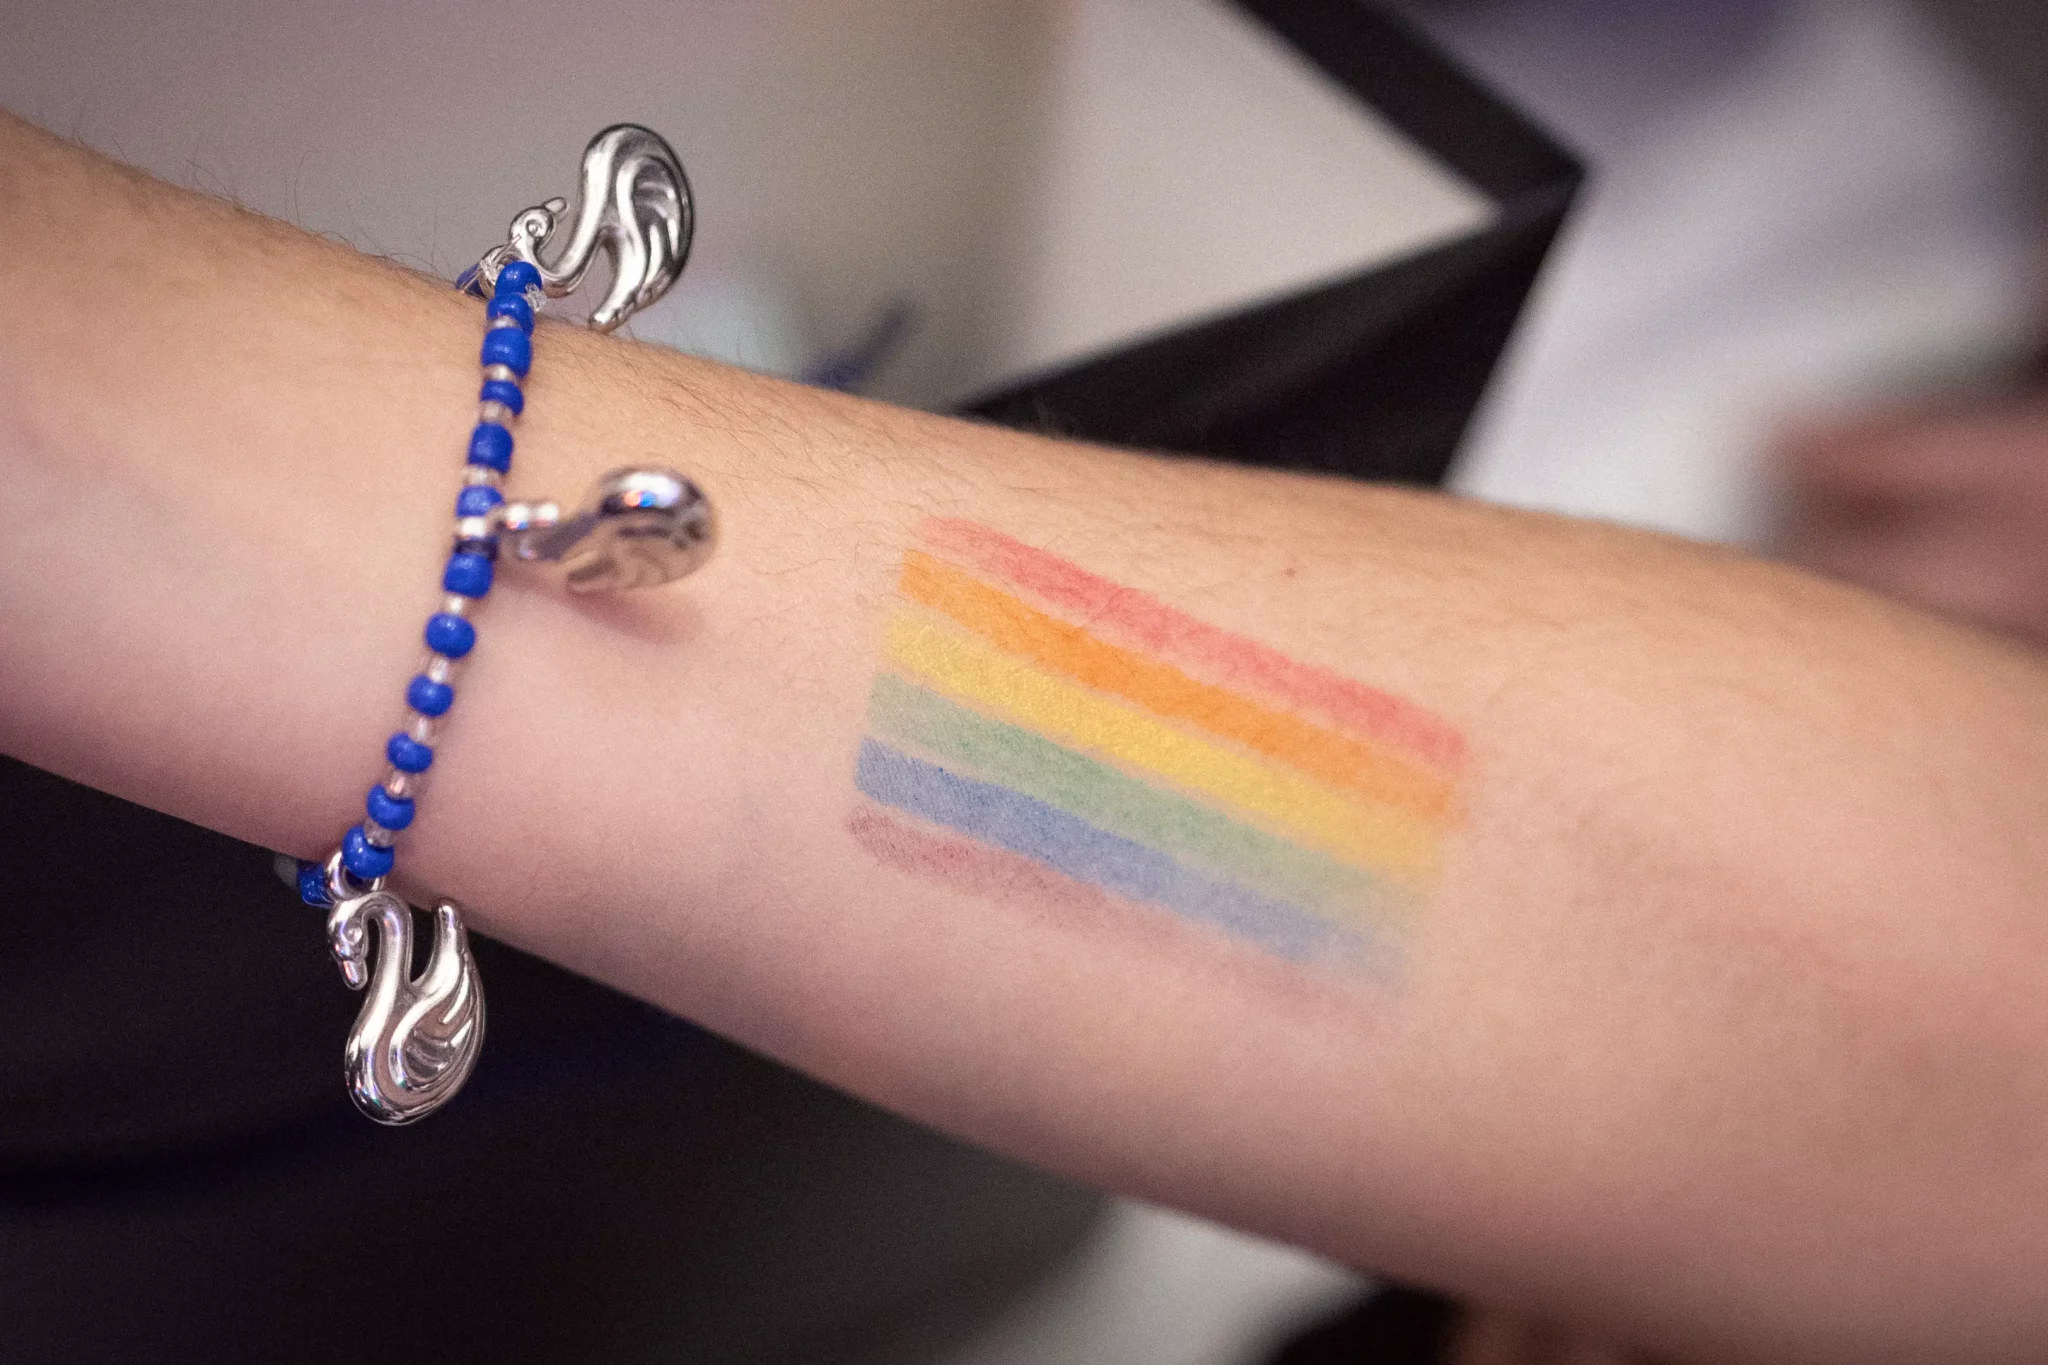 et tegnet prideflag på en arm